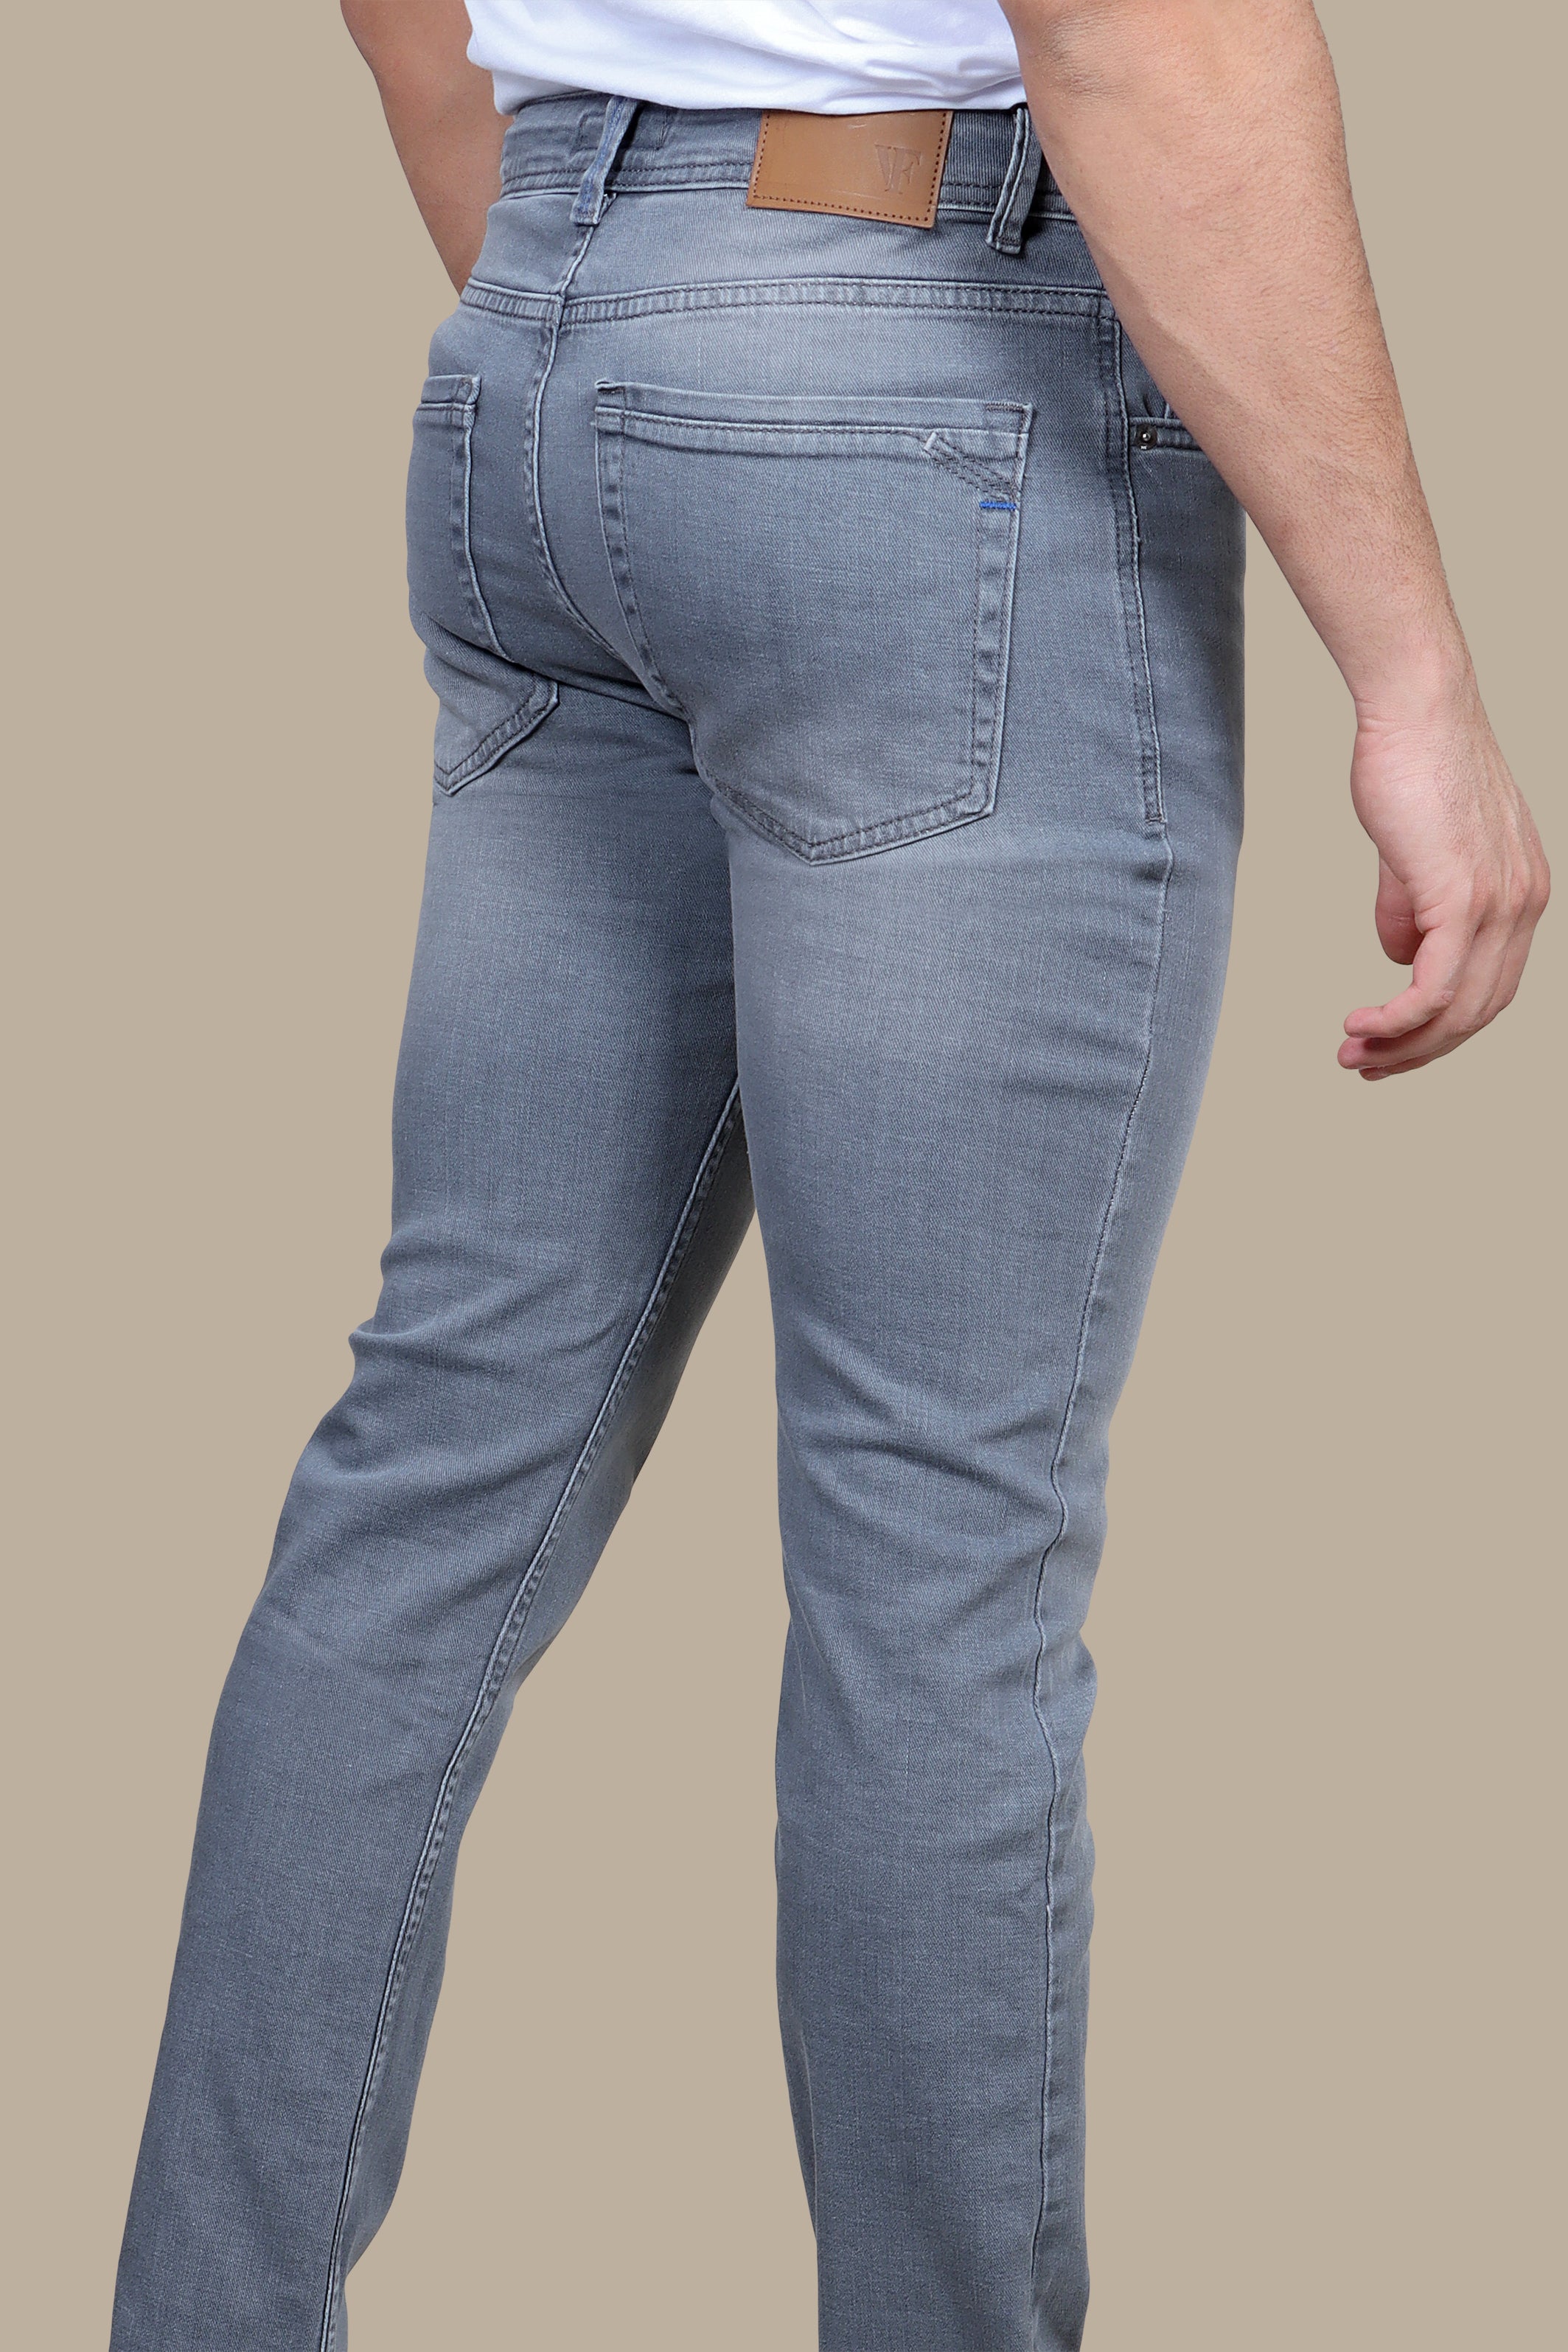 Urban Slate: Grey Basic Slim Fit Jeans